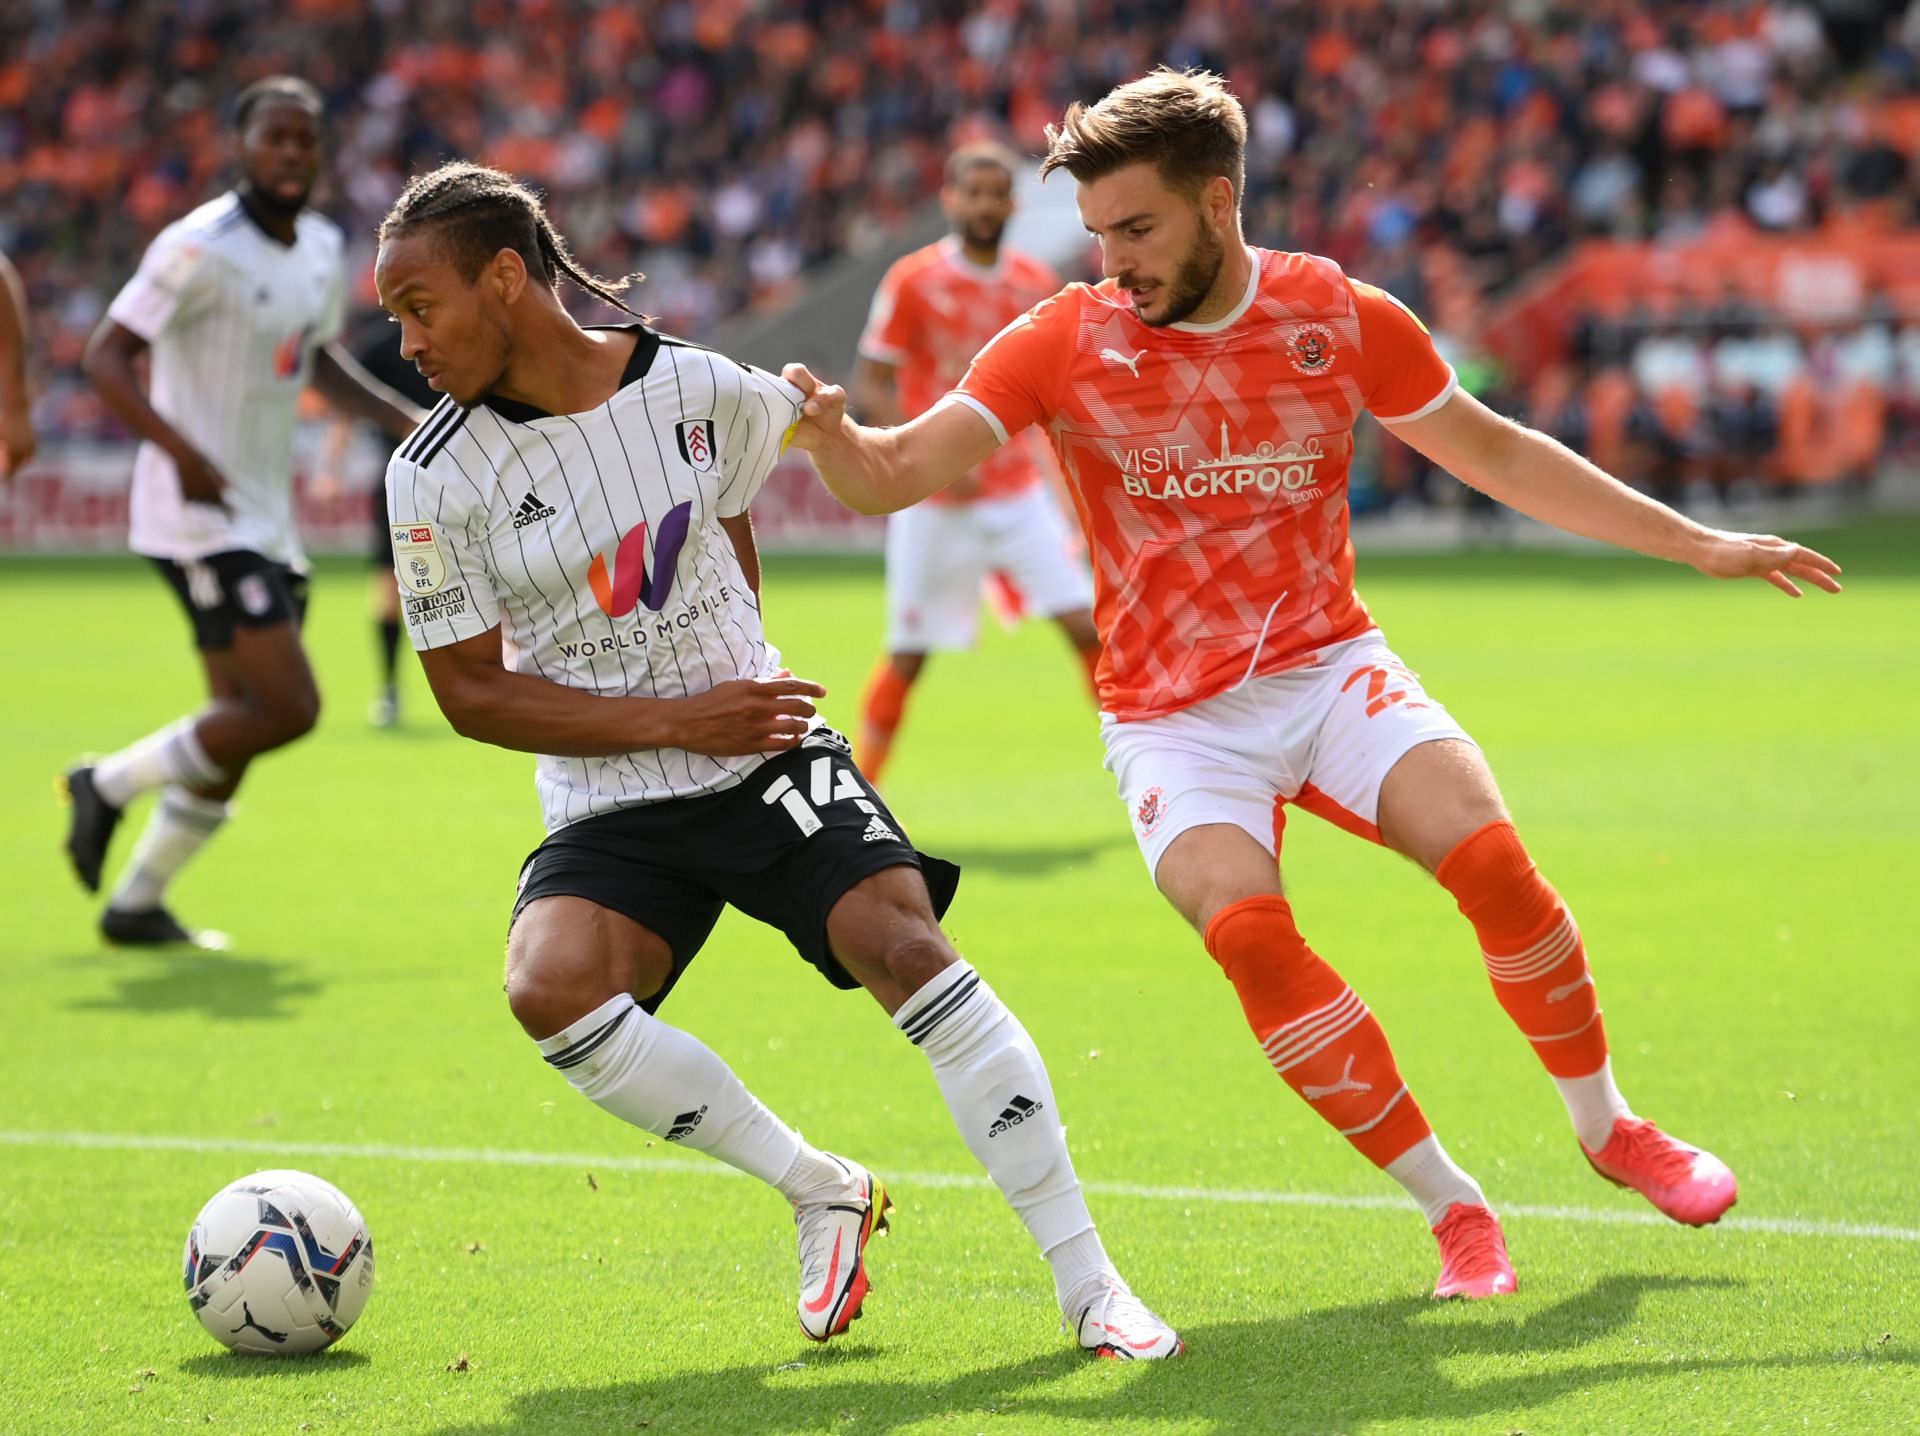 Fulham play host to Blackpool on Saturday